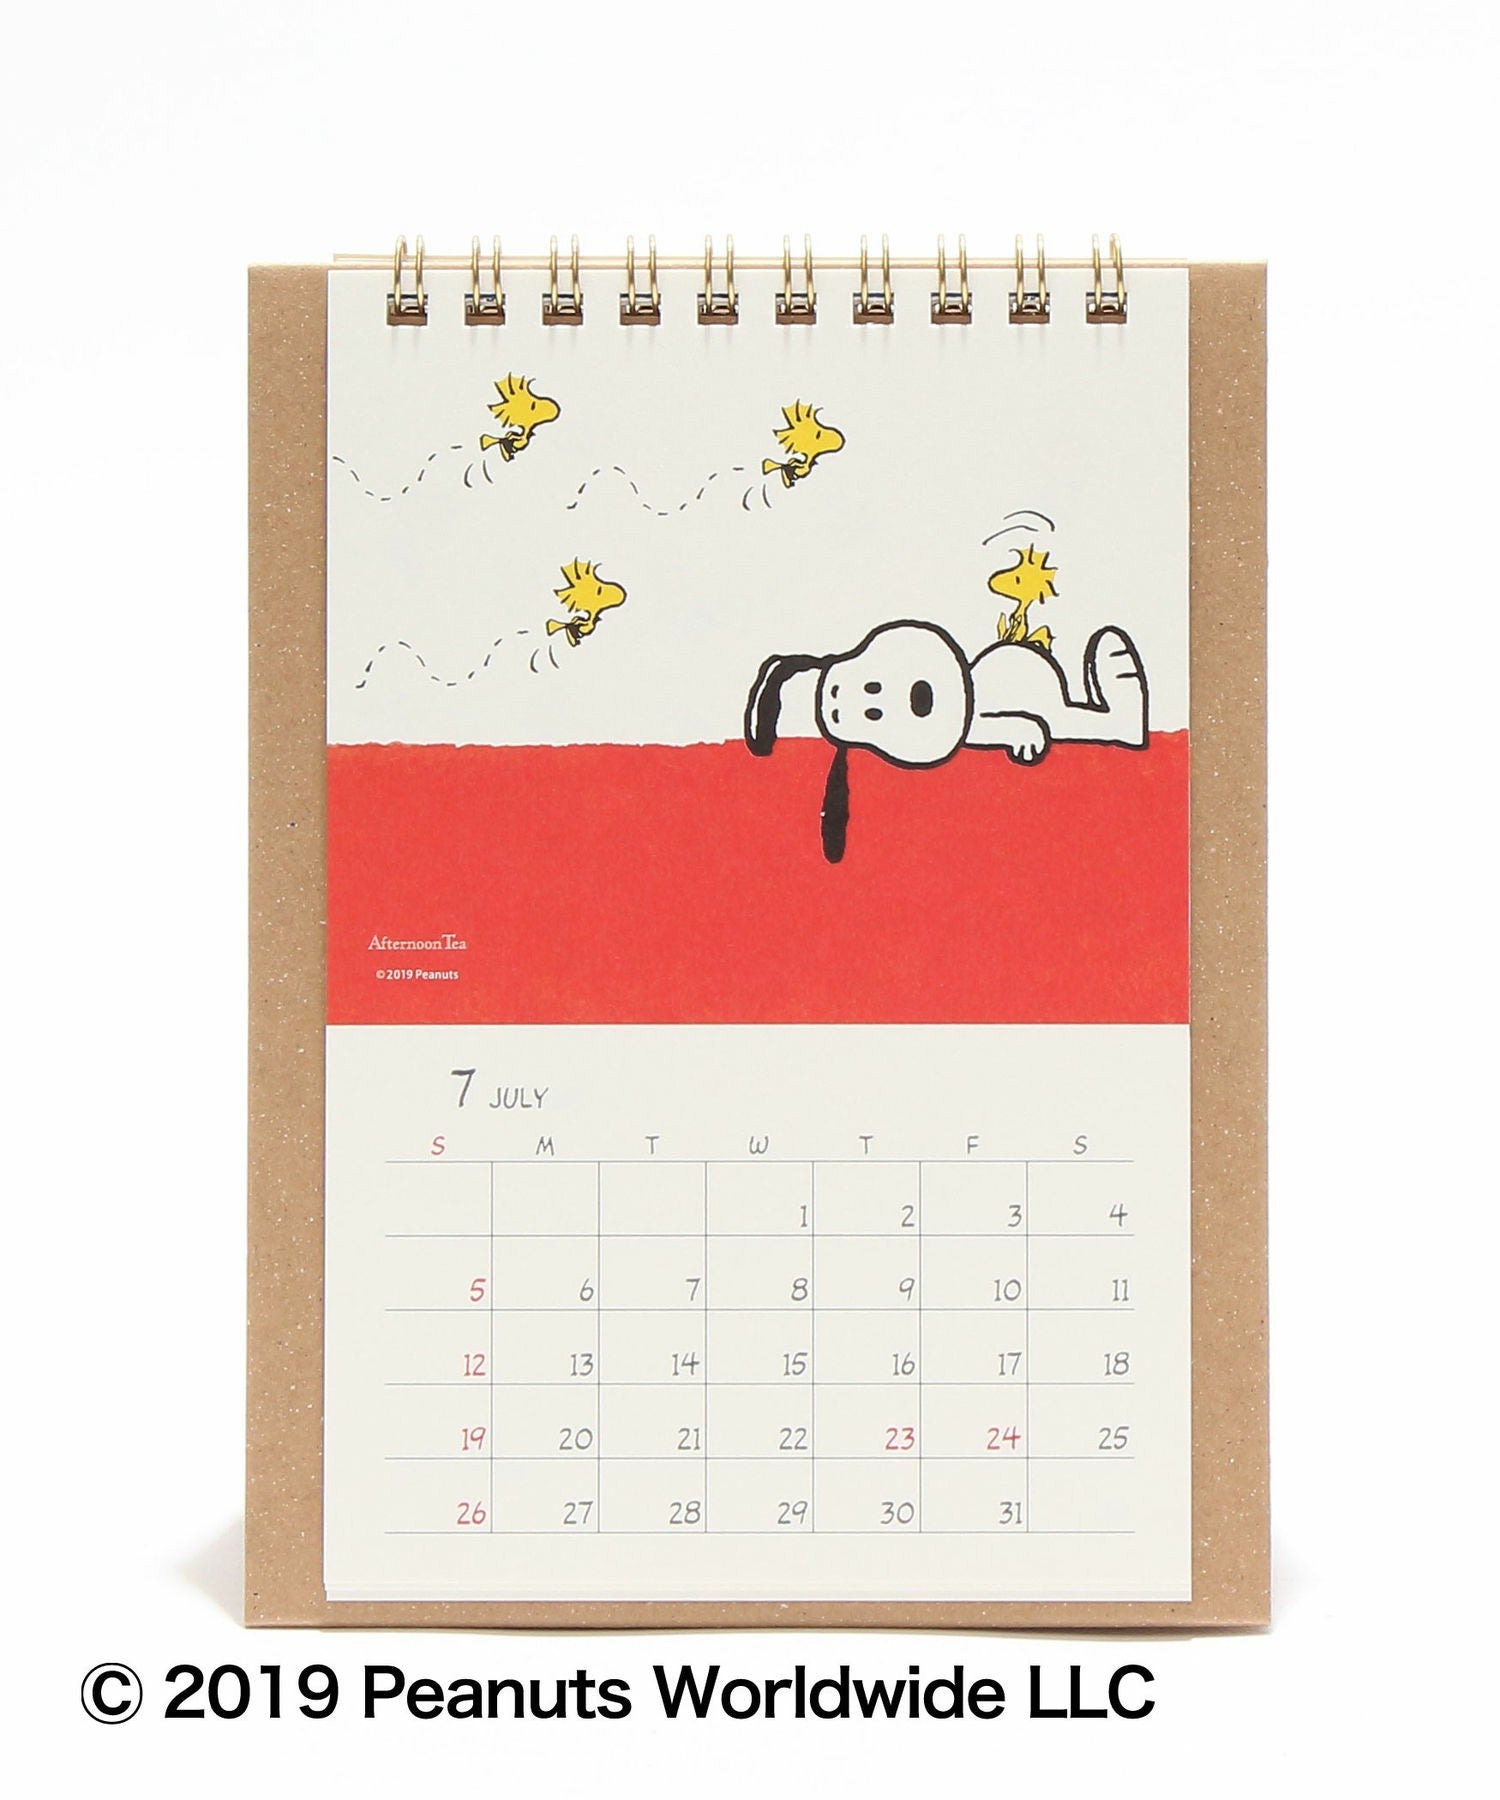 Snoopy Calendar Desktop 2020 Peanuts Afternoon Tea Japan